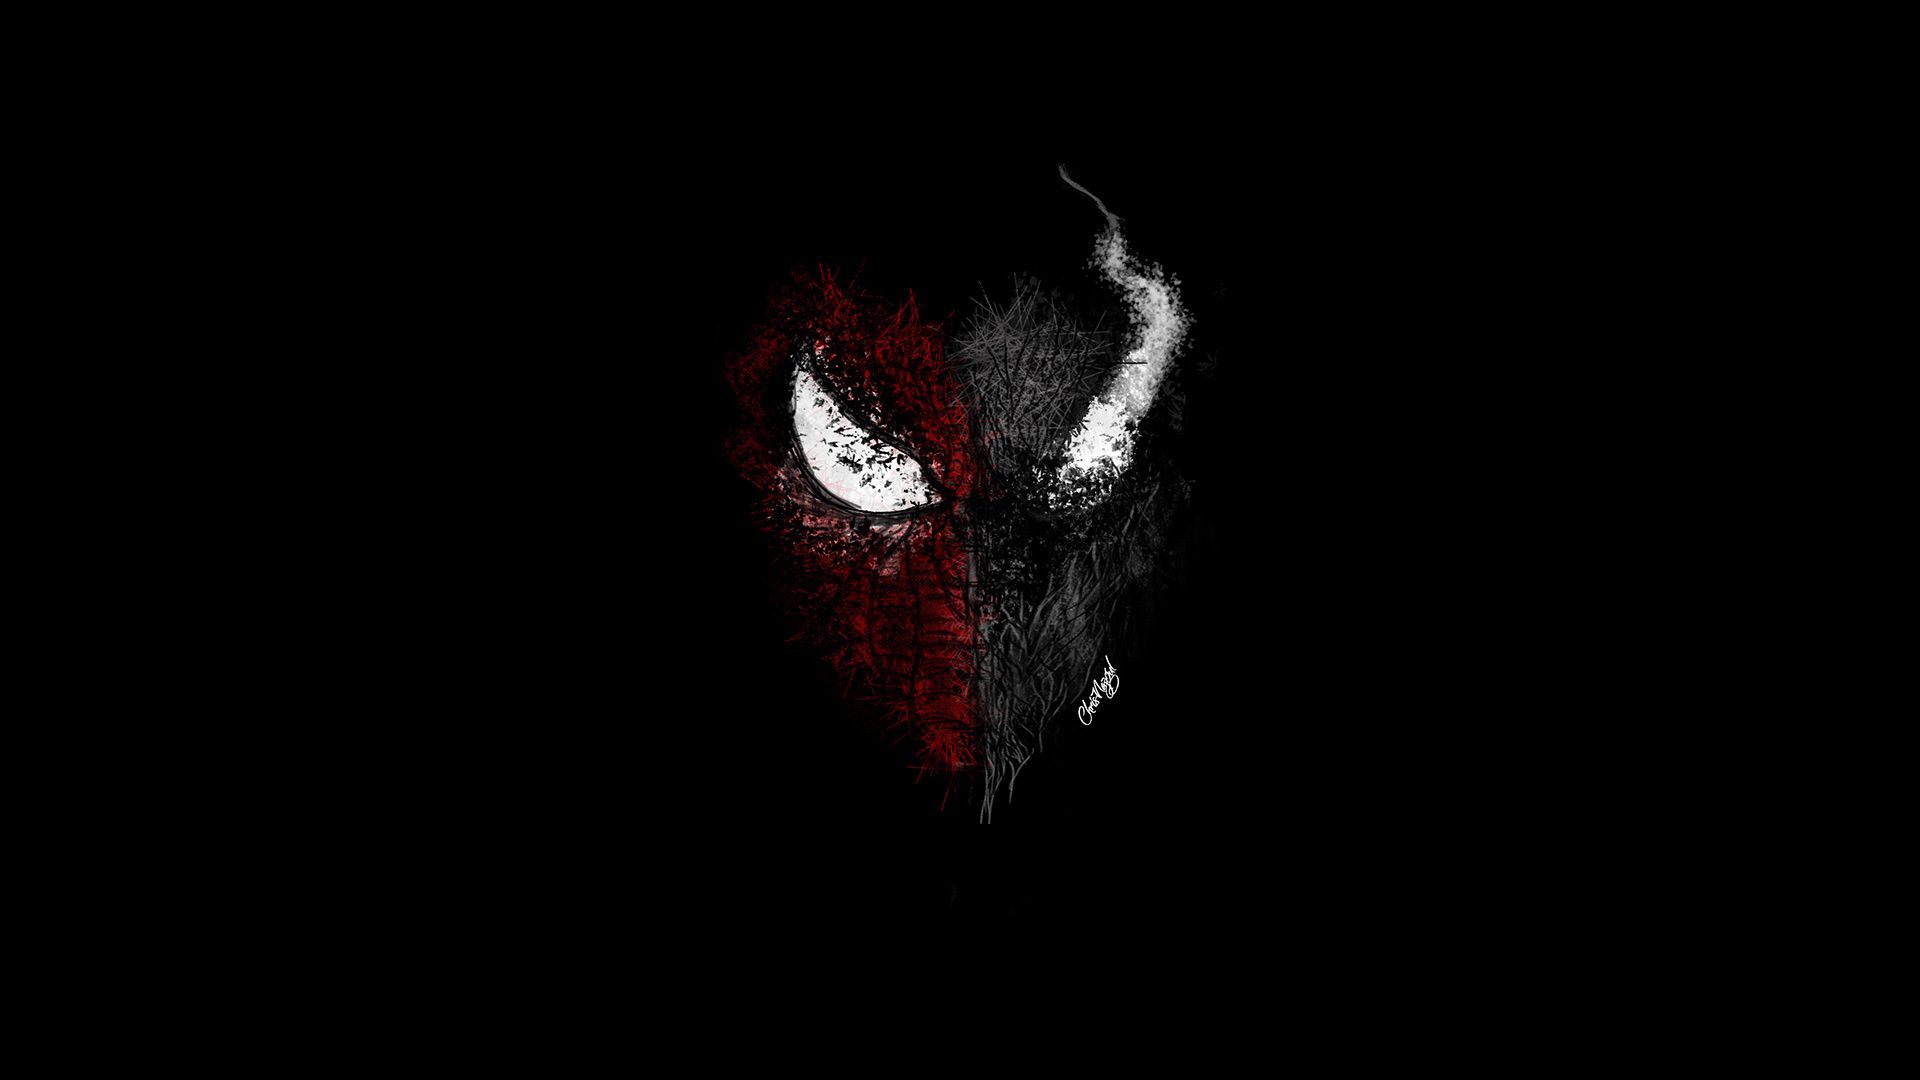 Download 1920x1080 Wallpaper Spider Man Venom, Minimal, Face Off, Digital Artwork, Full Hd, Hdtv, Fhd, 1080p, 1920x1080 HD Image, Background, 7730